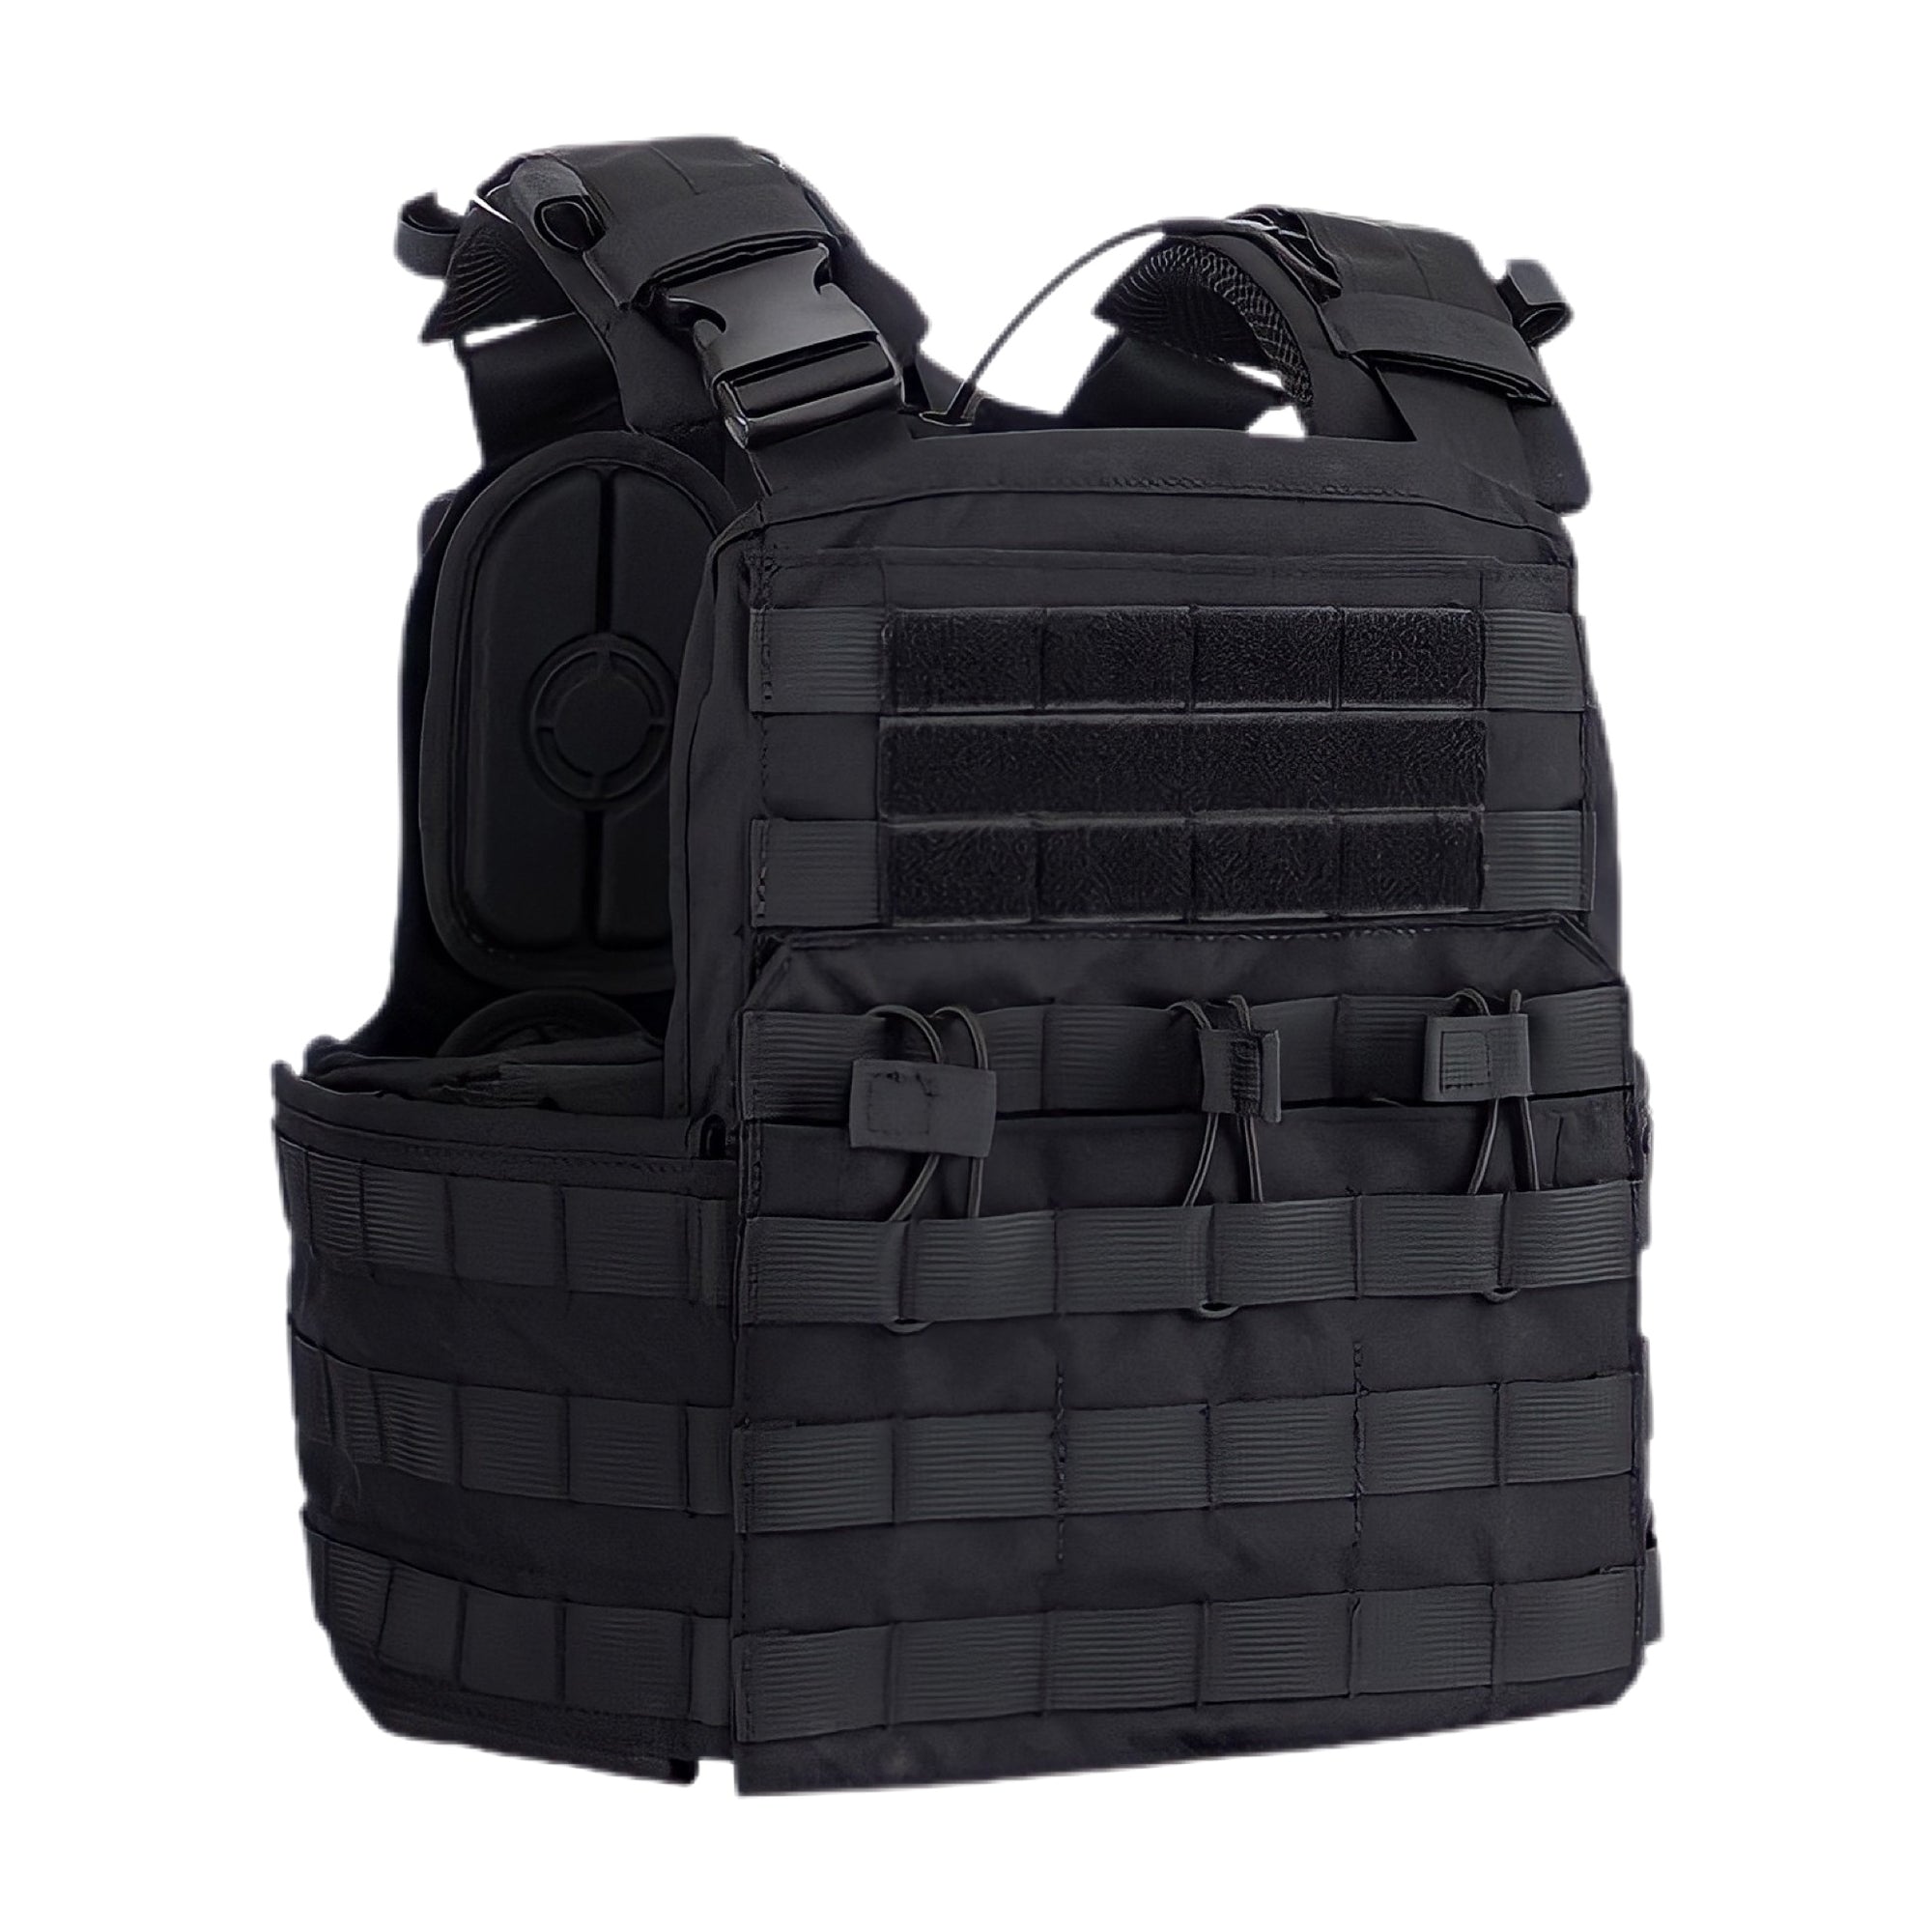 Black Tactical CPC Vest Molle Plate Carrier - FROGMANGLOBAL